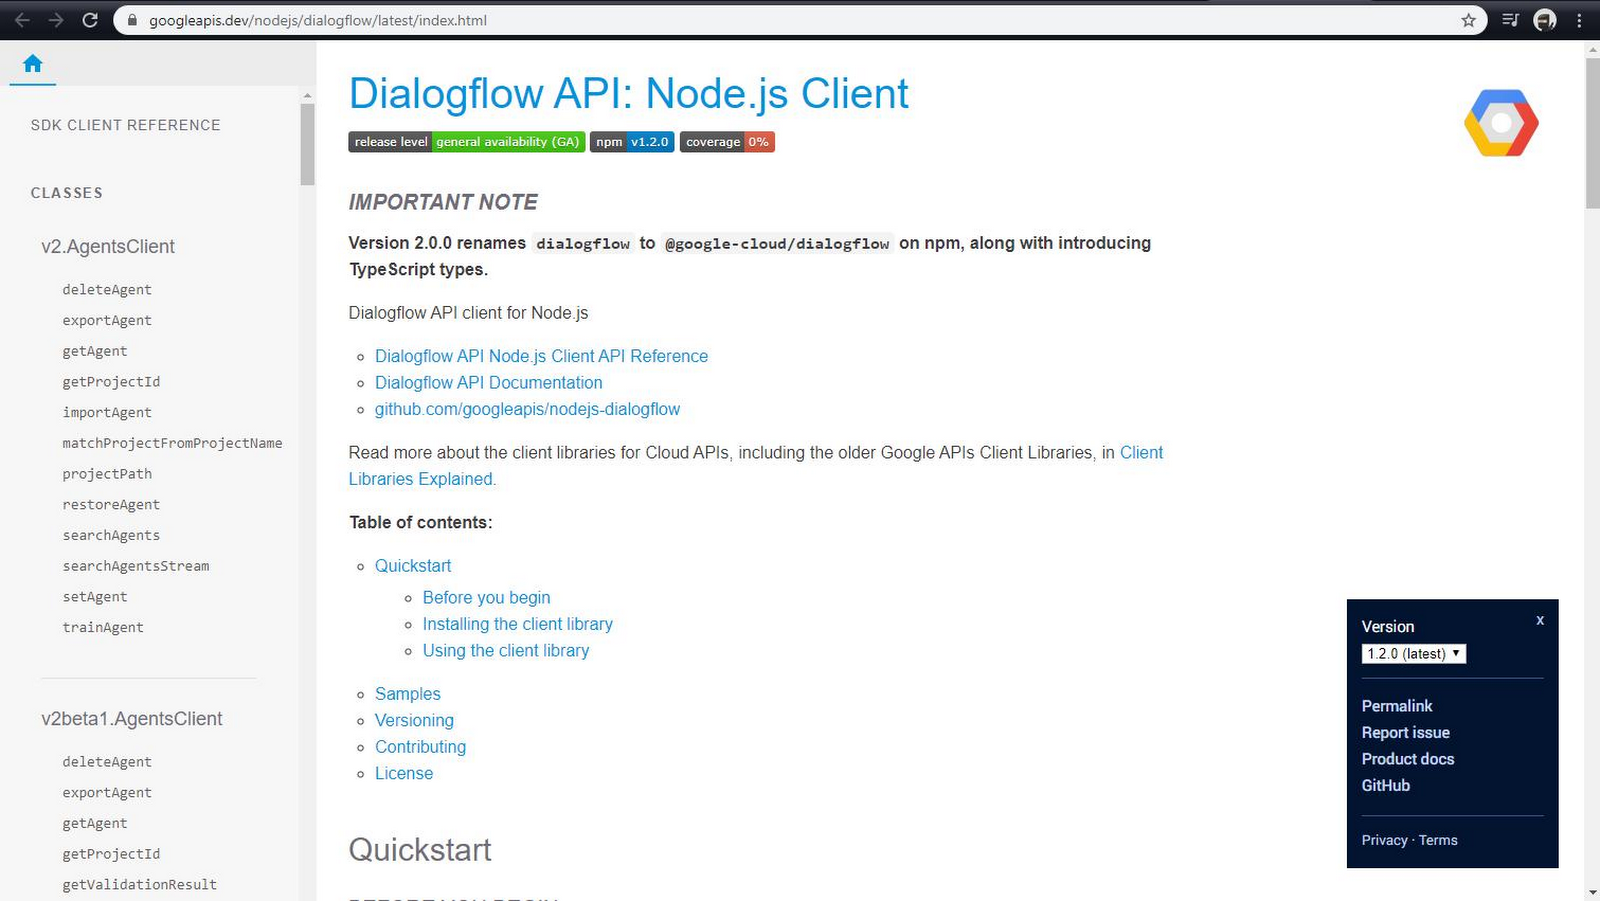 https://storage.googleapis.com/gweb-cloudblog-publish/images/Dialogflow_API.max-1600x1600.jpg